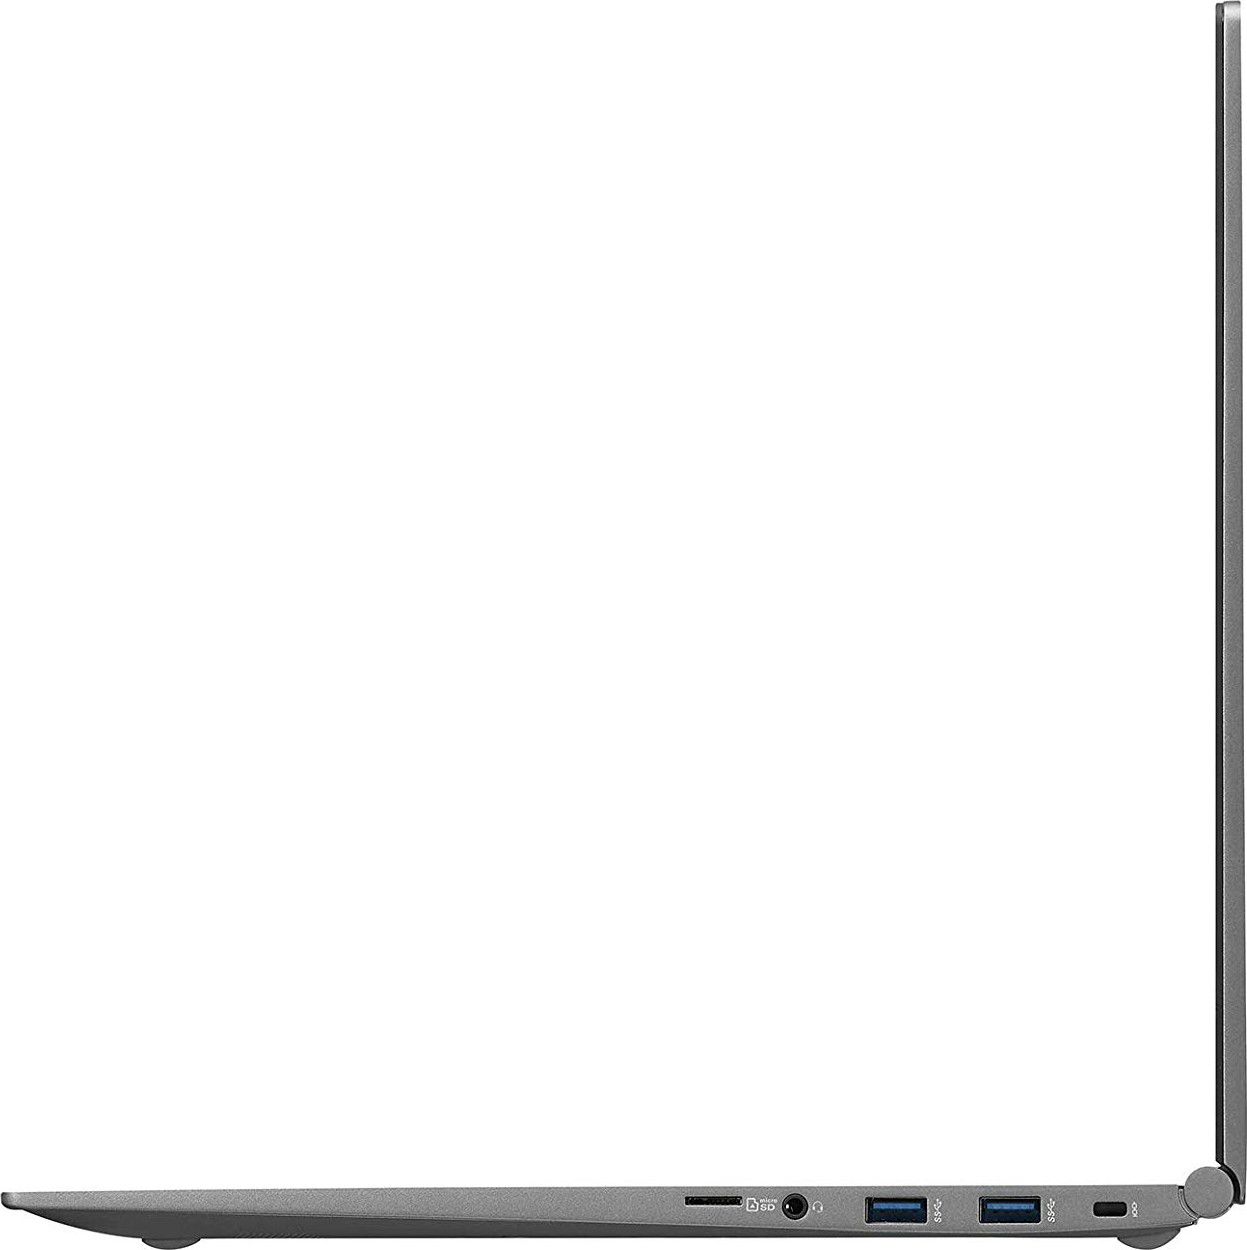 LG gram Thin and Light Laptop - 17" (2560 x 1600) IPS Display, Intel 8th Gen Core i7, 16GB RAM, 512GB SSD, up to 19.5 Hour Battery, Thunderbolt 3 - 17Z990-R.AAS8U1 (2019), Dark Silver